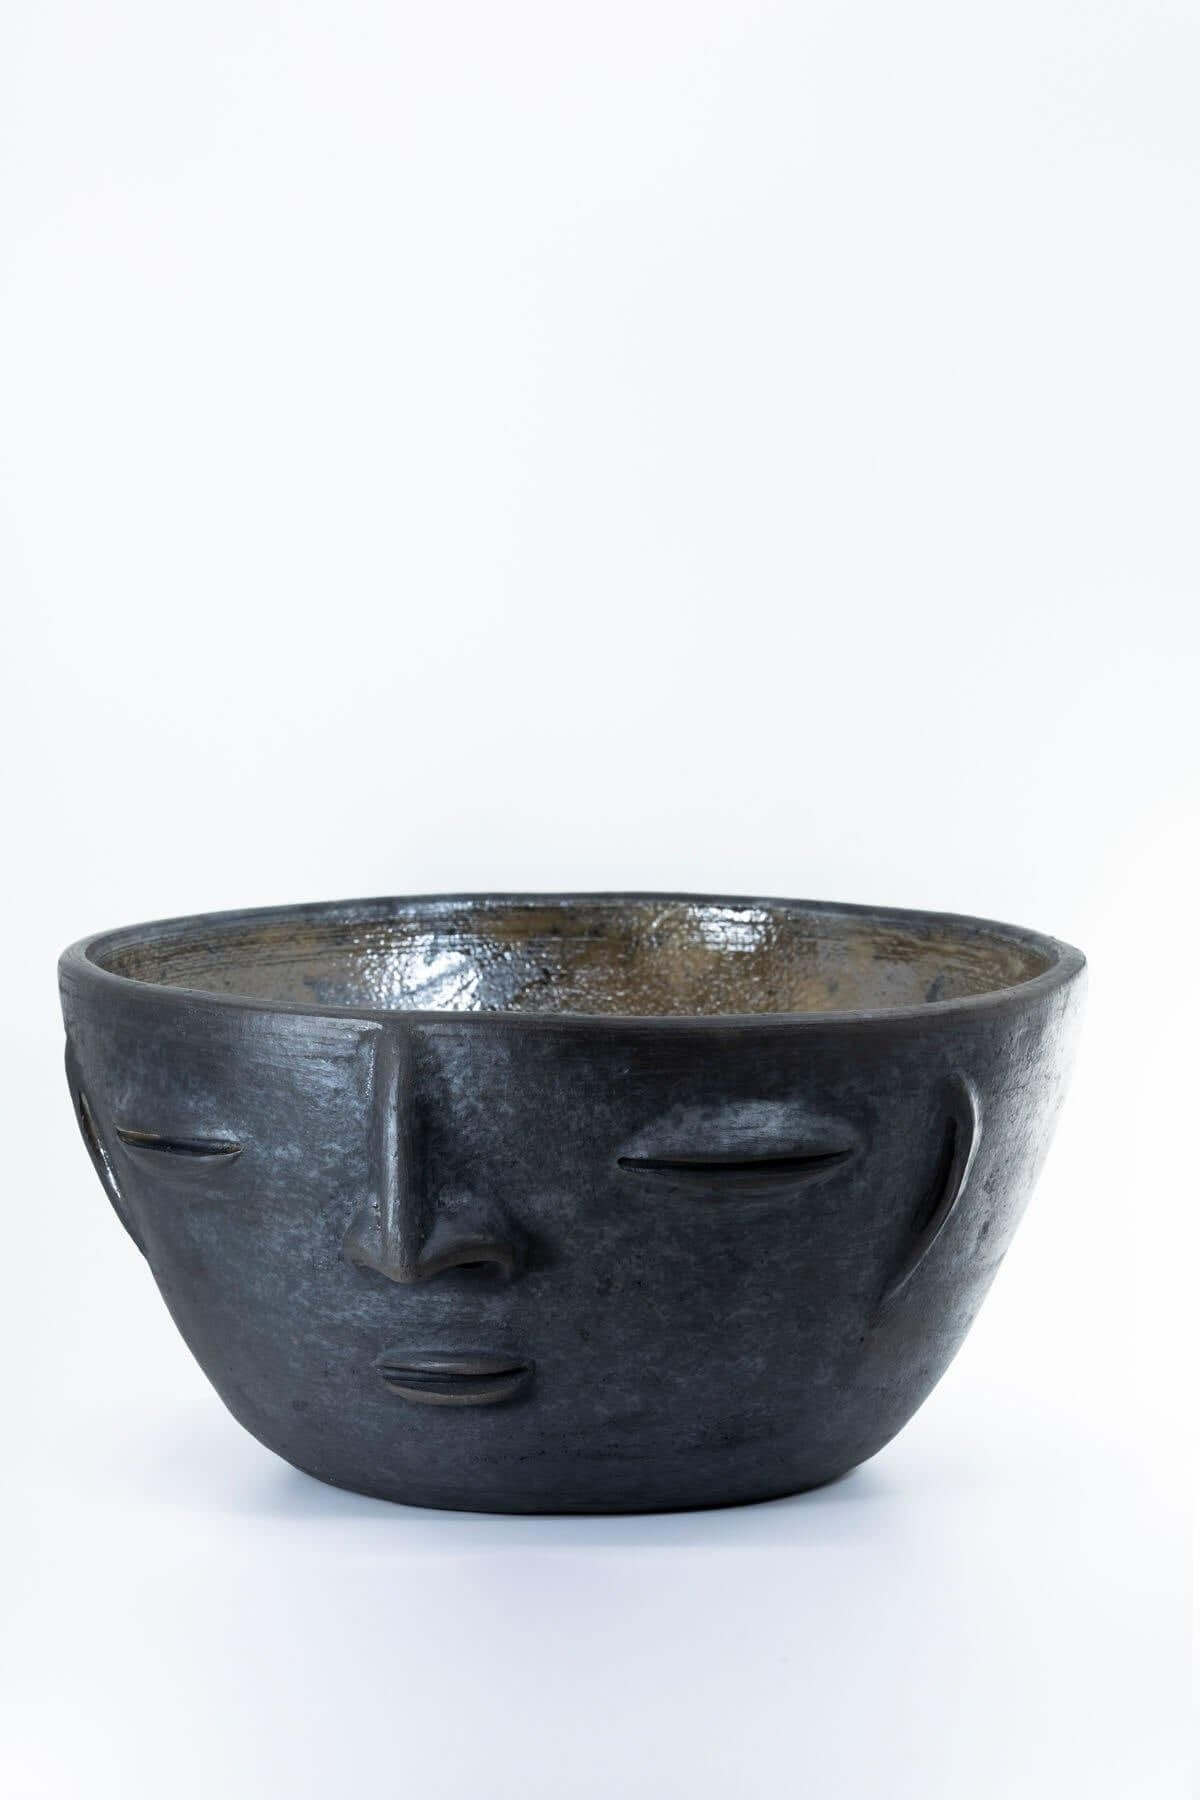 Faced Ceramic Decorative Bowl by Ana María Hernández - Wool+Clay